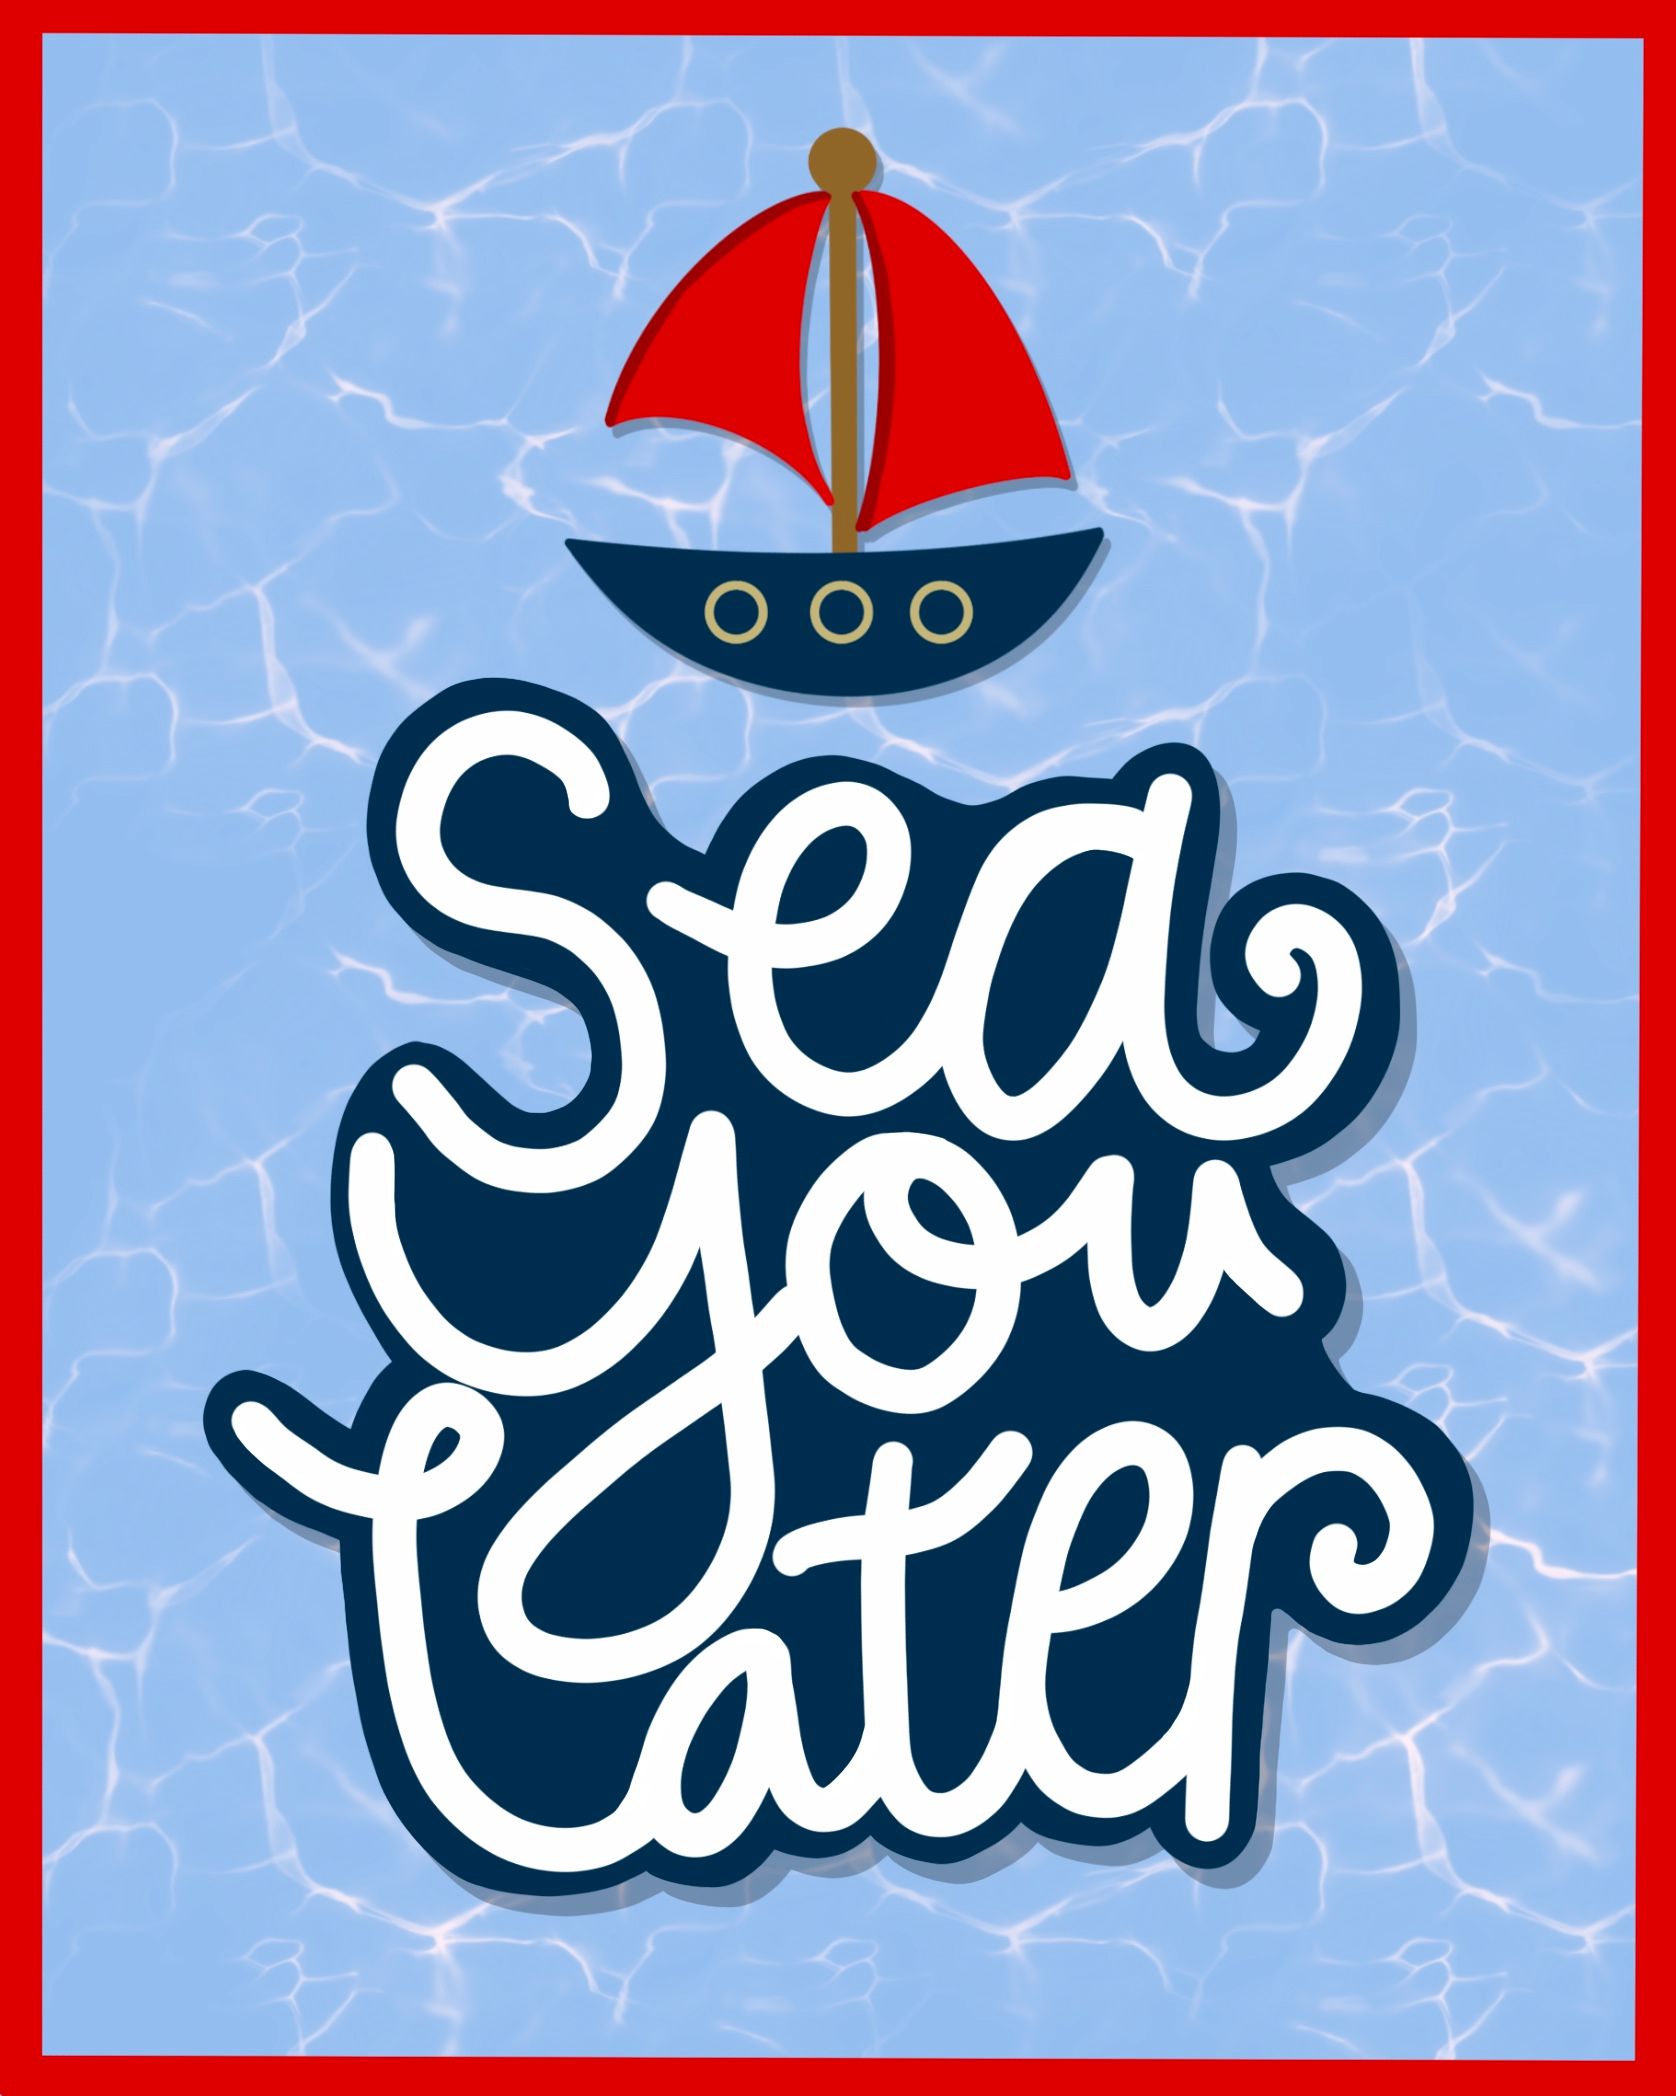 Card design "sea you later"